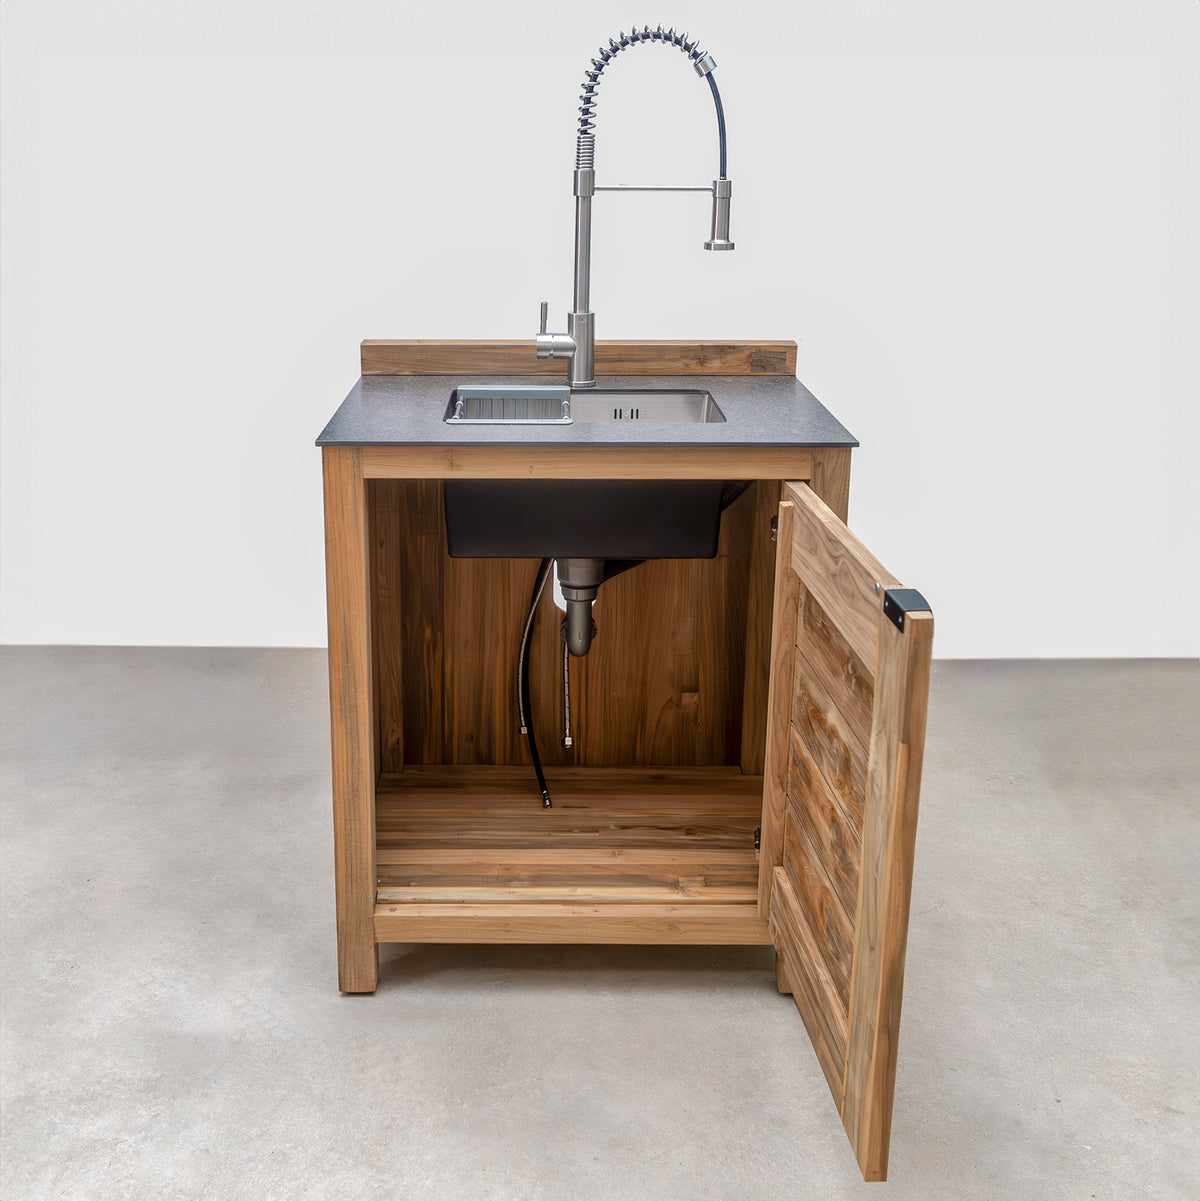 Draco Grills Teak 4 Burner Outdoor Kitchen with Modular Cupboards, Drawers, Sink, Double Fridge, Corner Cabinet